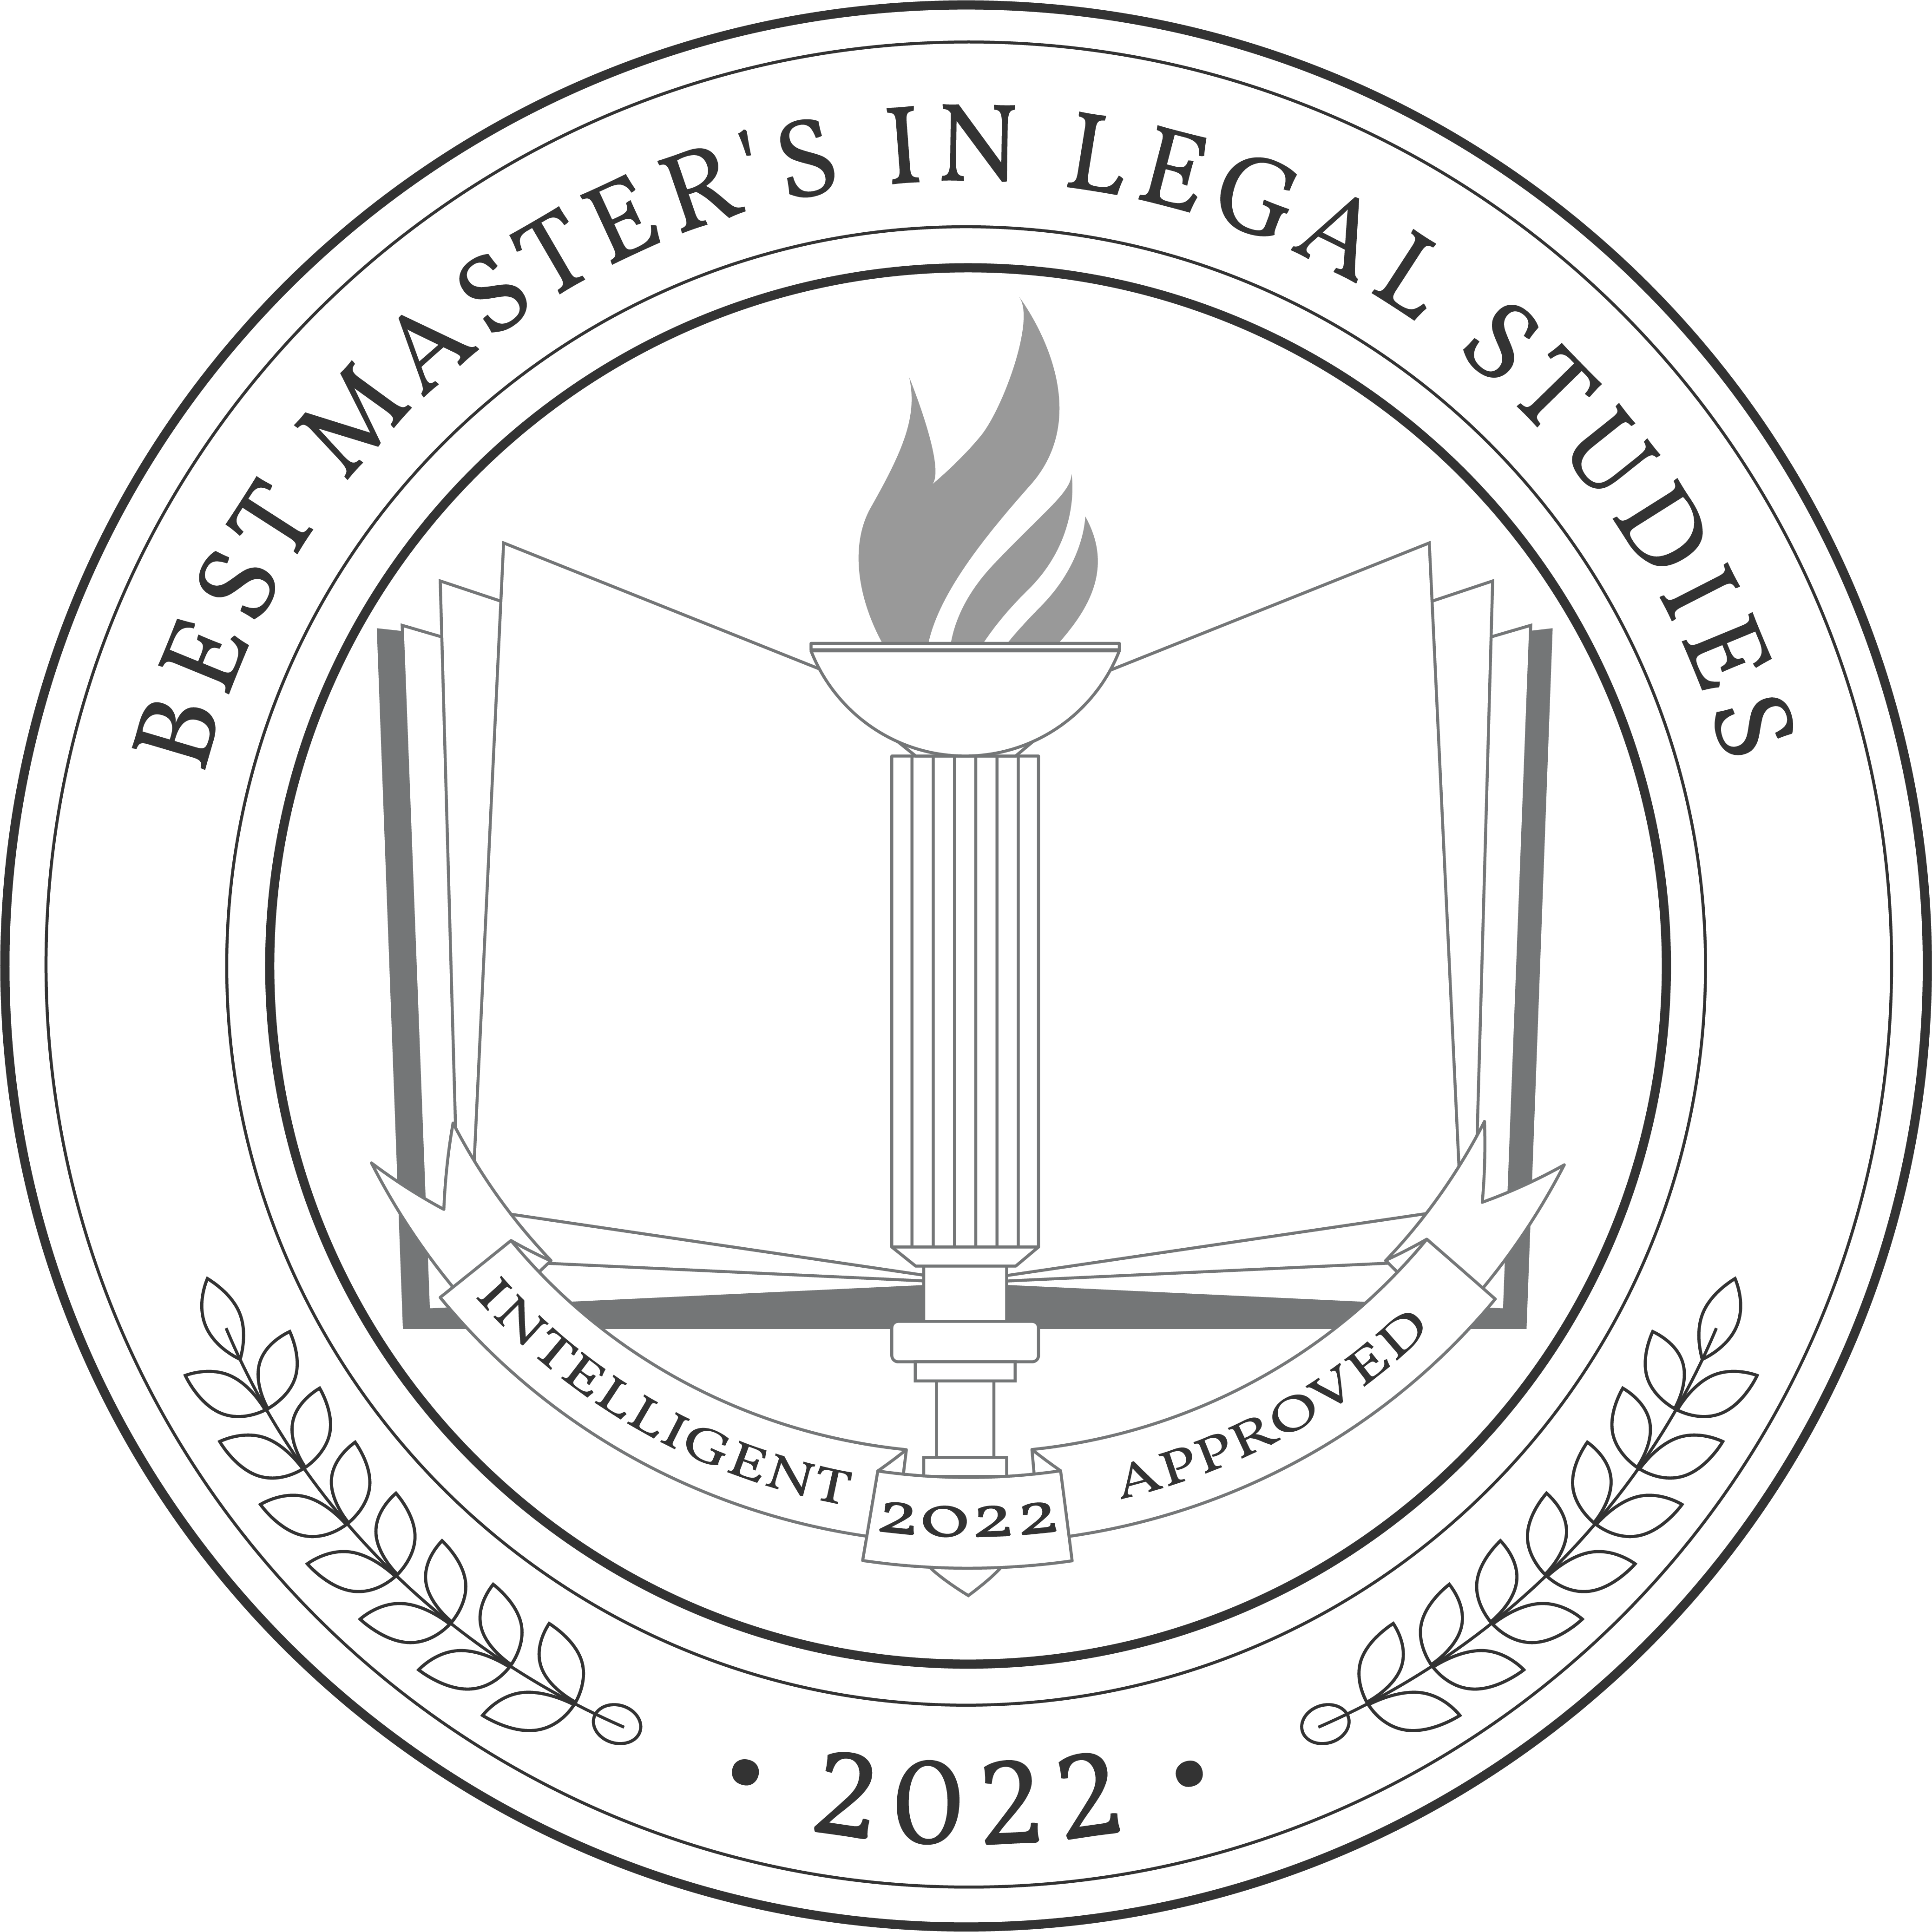 Best Online Master's in Legal Studies Degree Programs